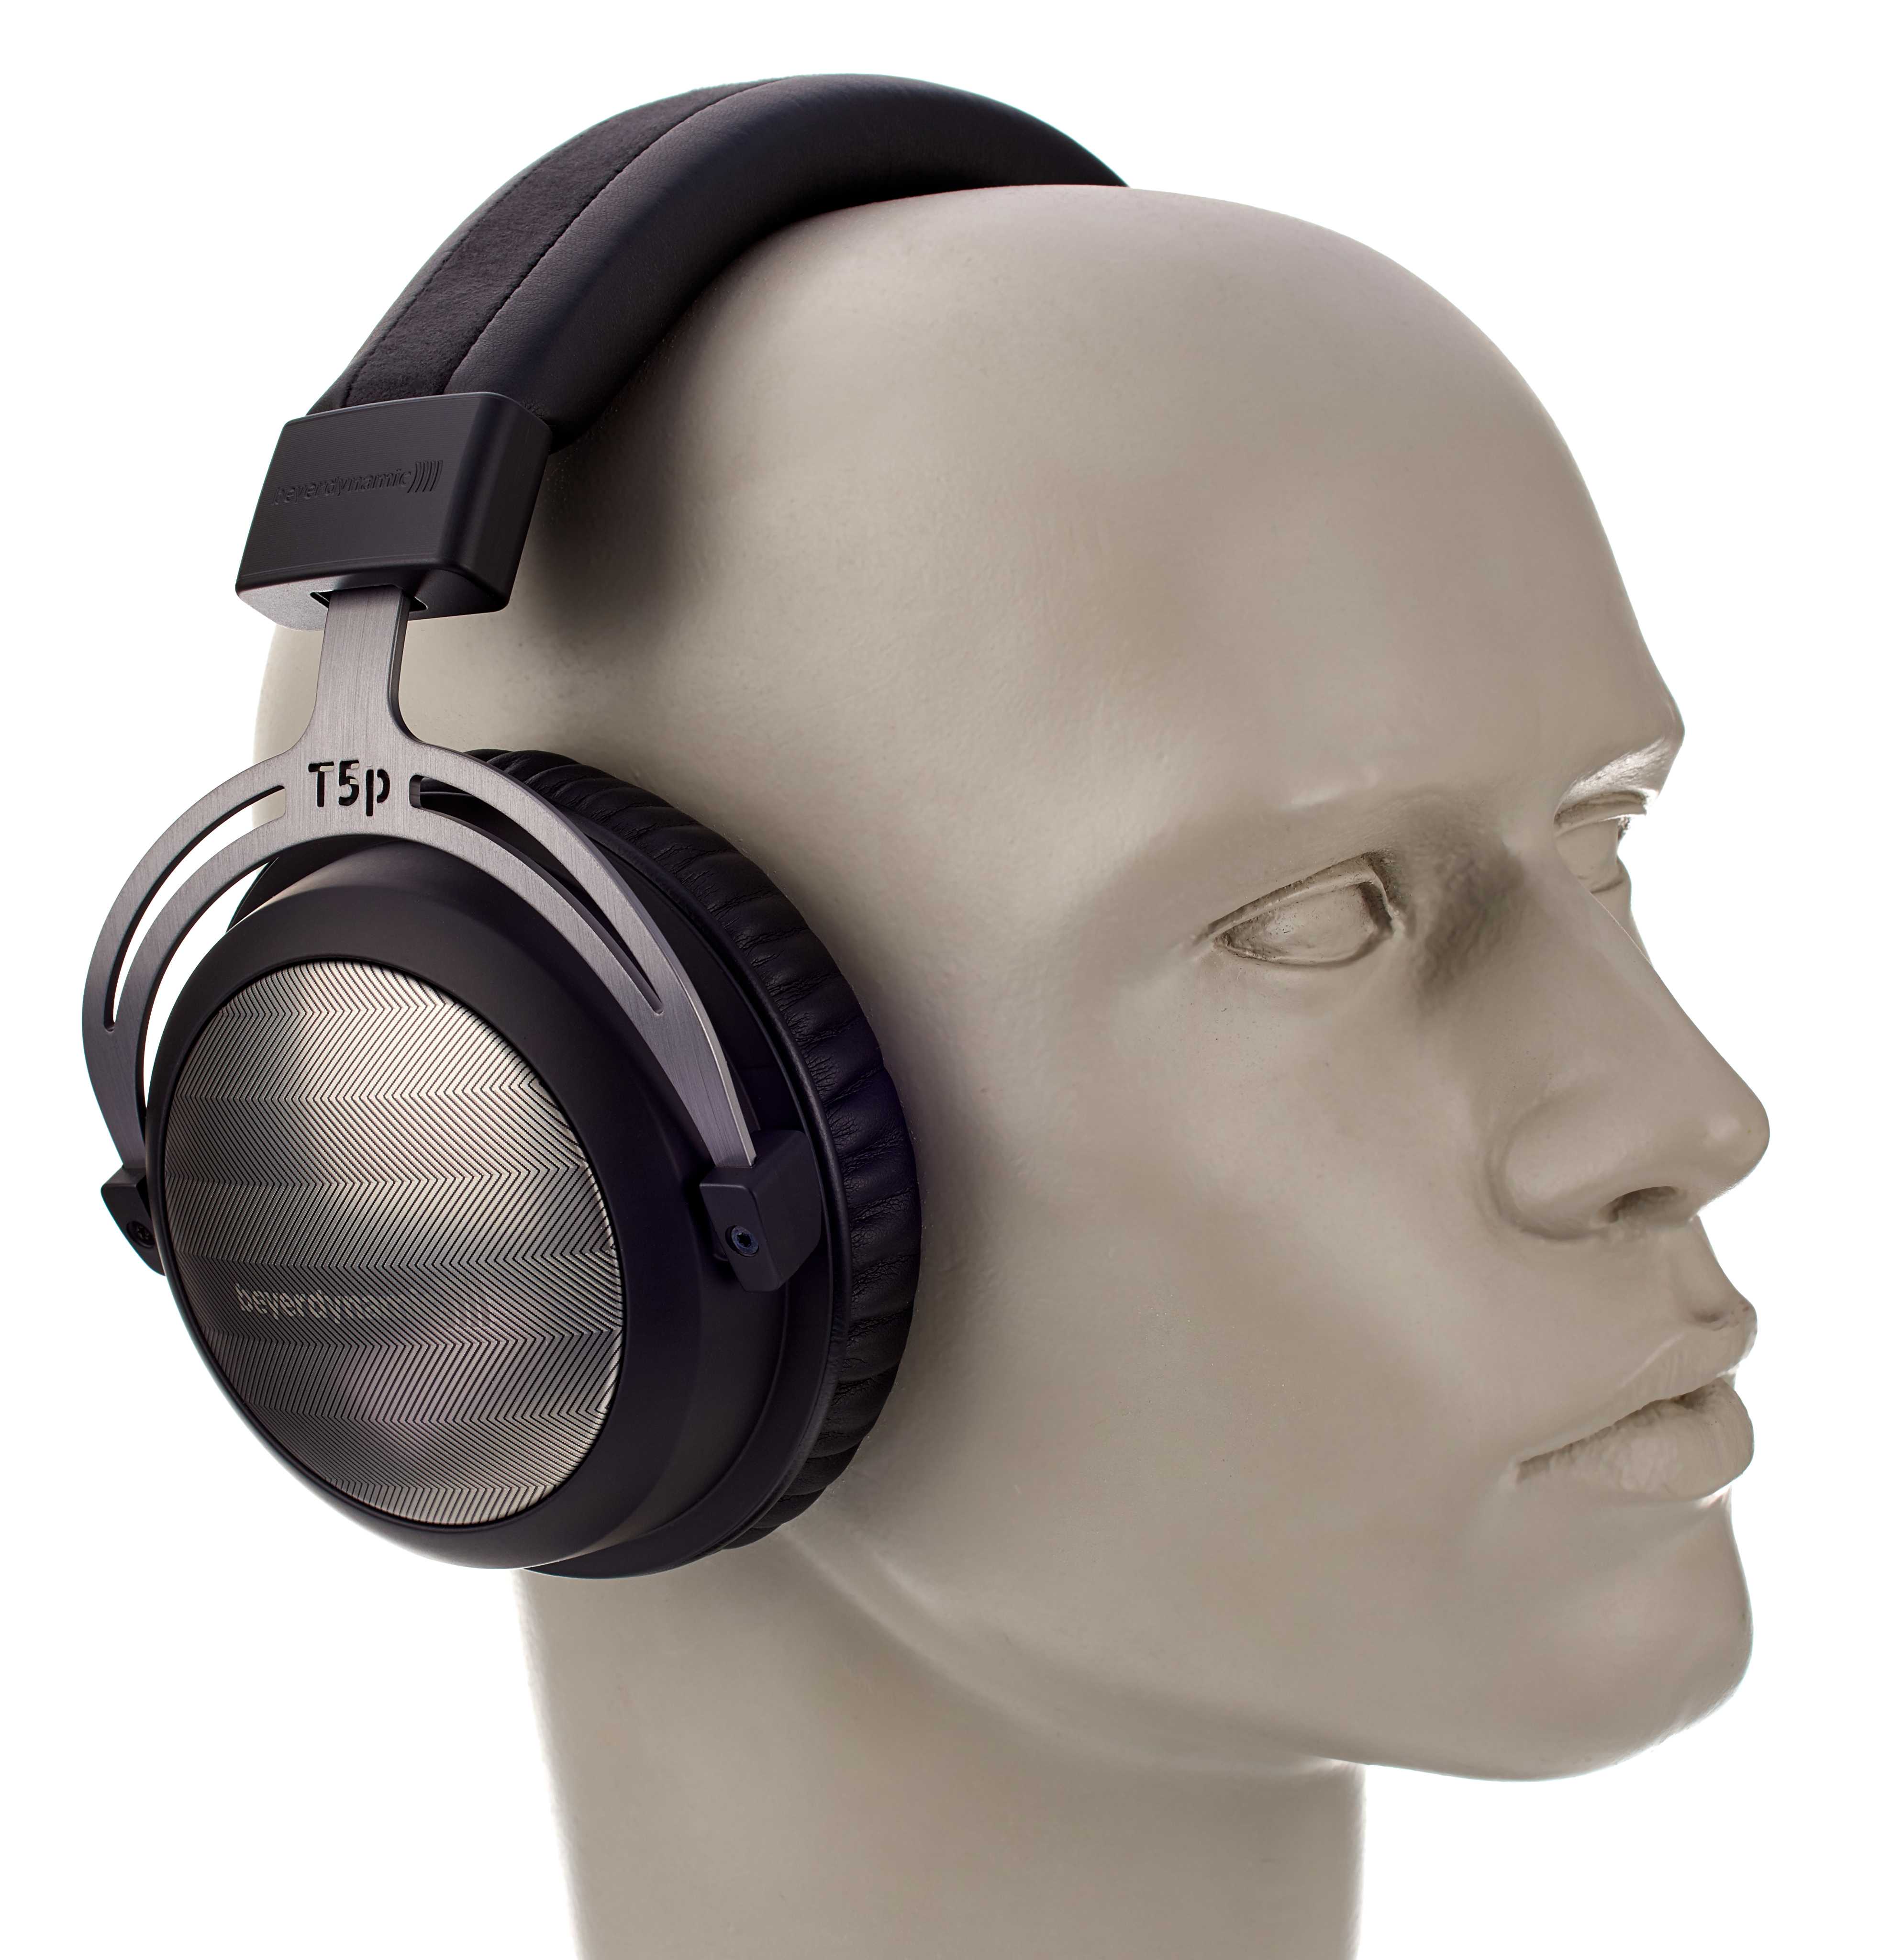 Beyerdynamic t5p tesla audiophile portable and home audio stereo headphone